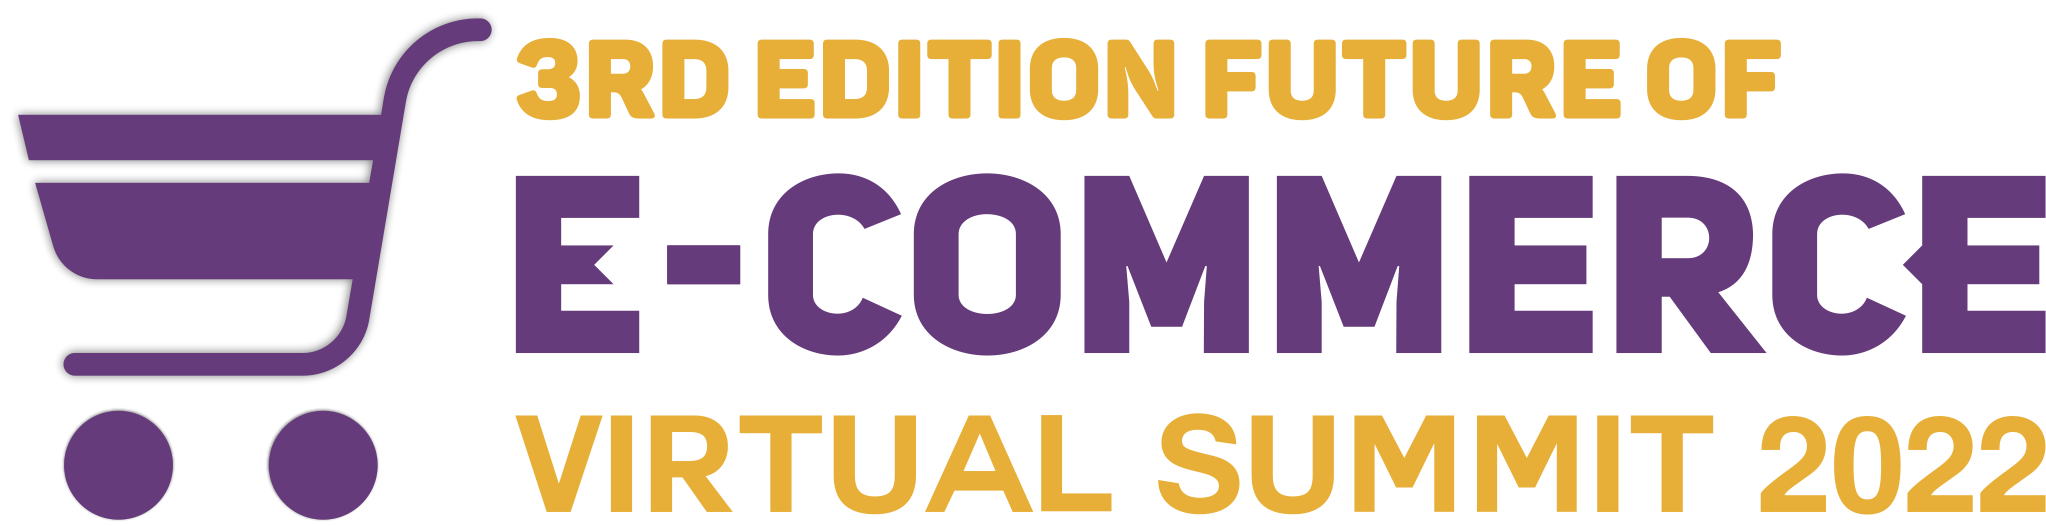 3rd Edition Future of E-Commerce Virtual Summit 2022